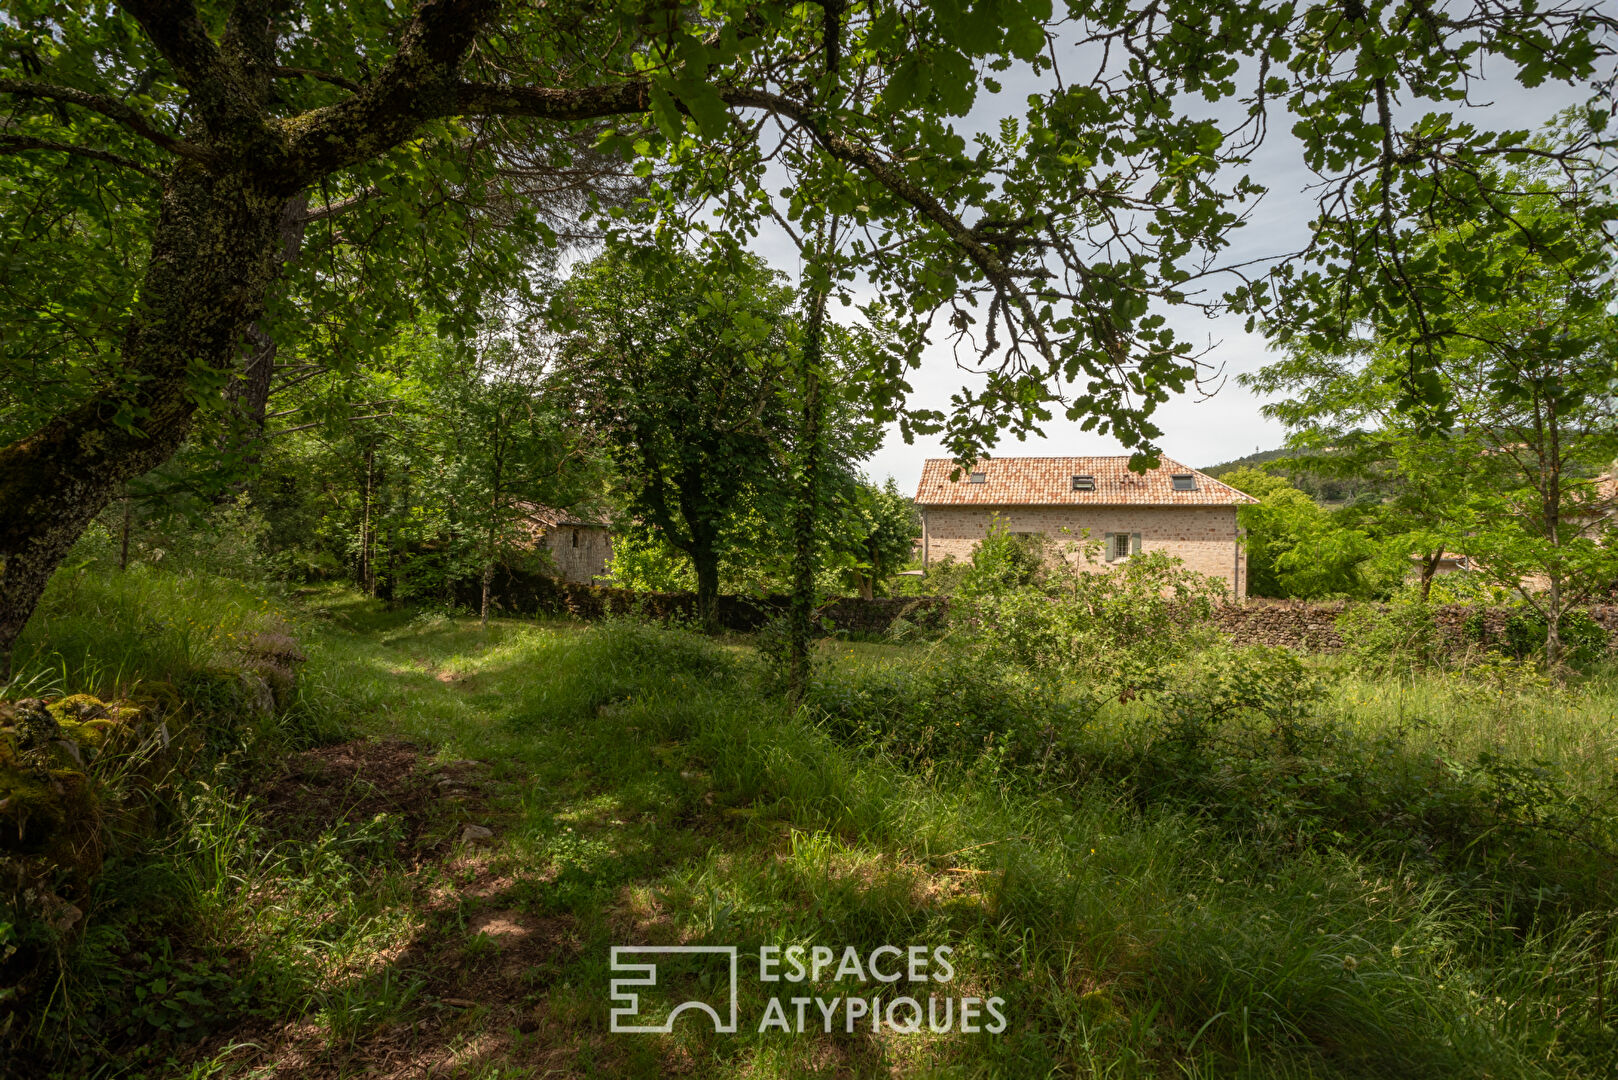 Splendid manor house in the heart of the Monts de l’Ardèche nature park